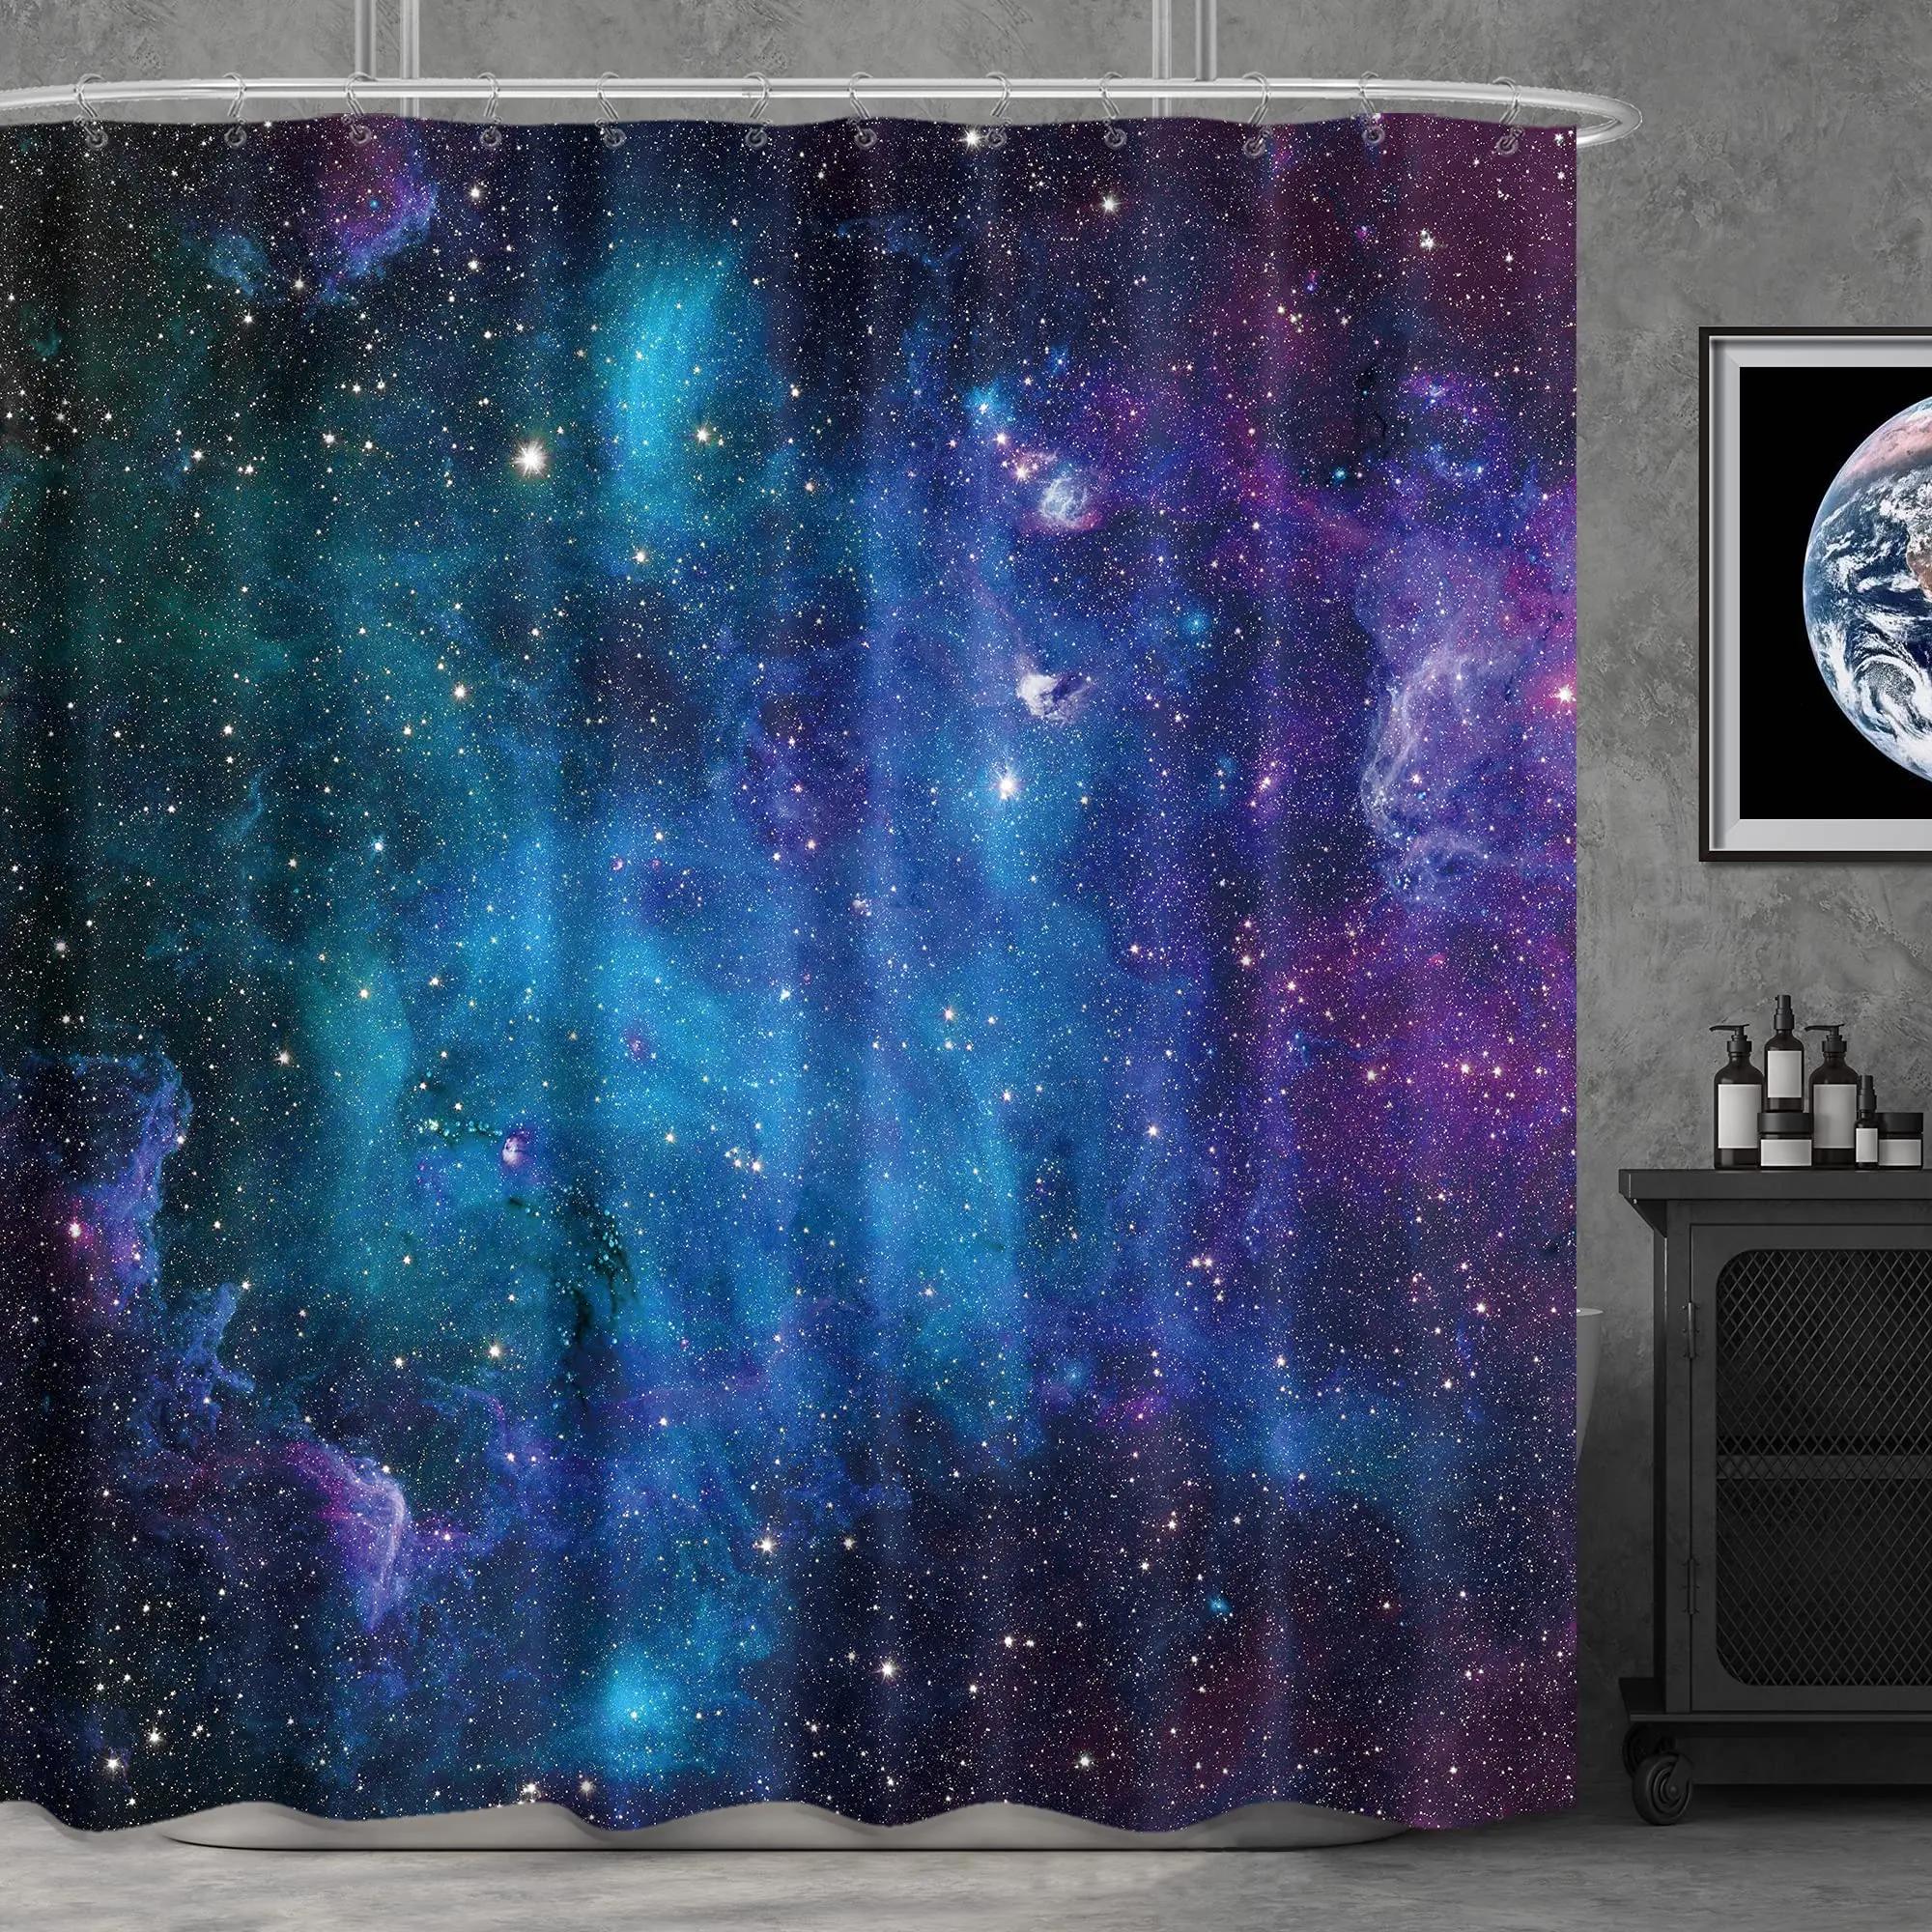 

Star Outer Space Shower Curtain for Bathroom Decor Starry Galaxy Bathtub Set Trippy Nebula Universe Planet Bathroom Curtains Set